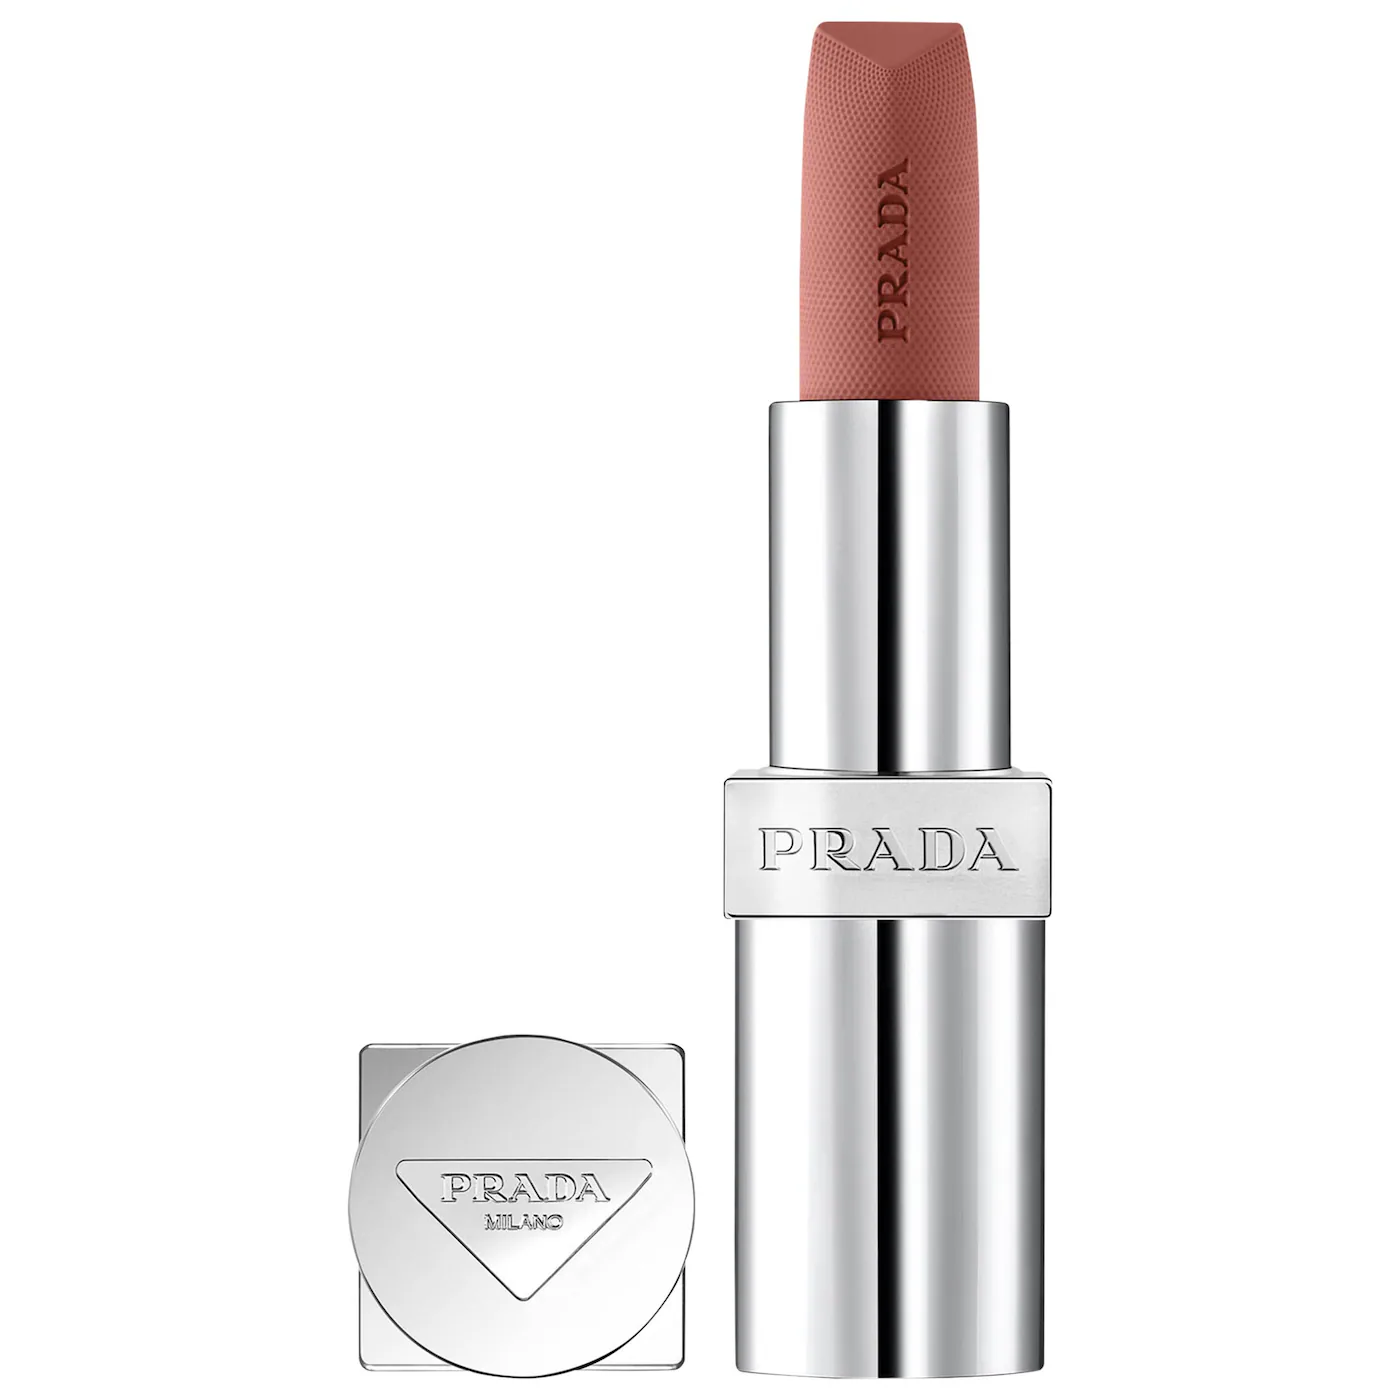 Prada Beauty Monochrome Soft Matte Refillable Lipstick